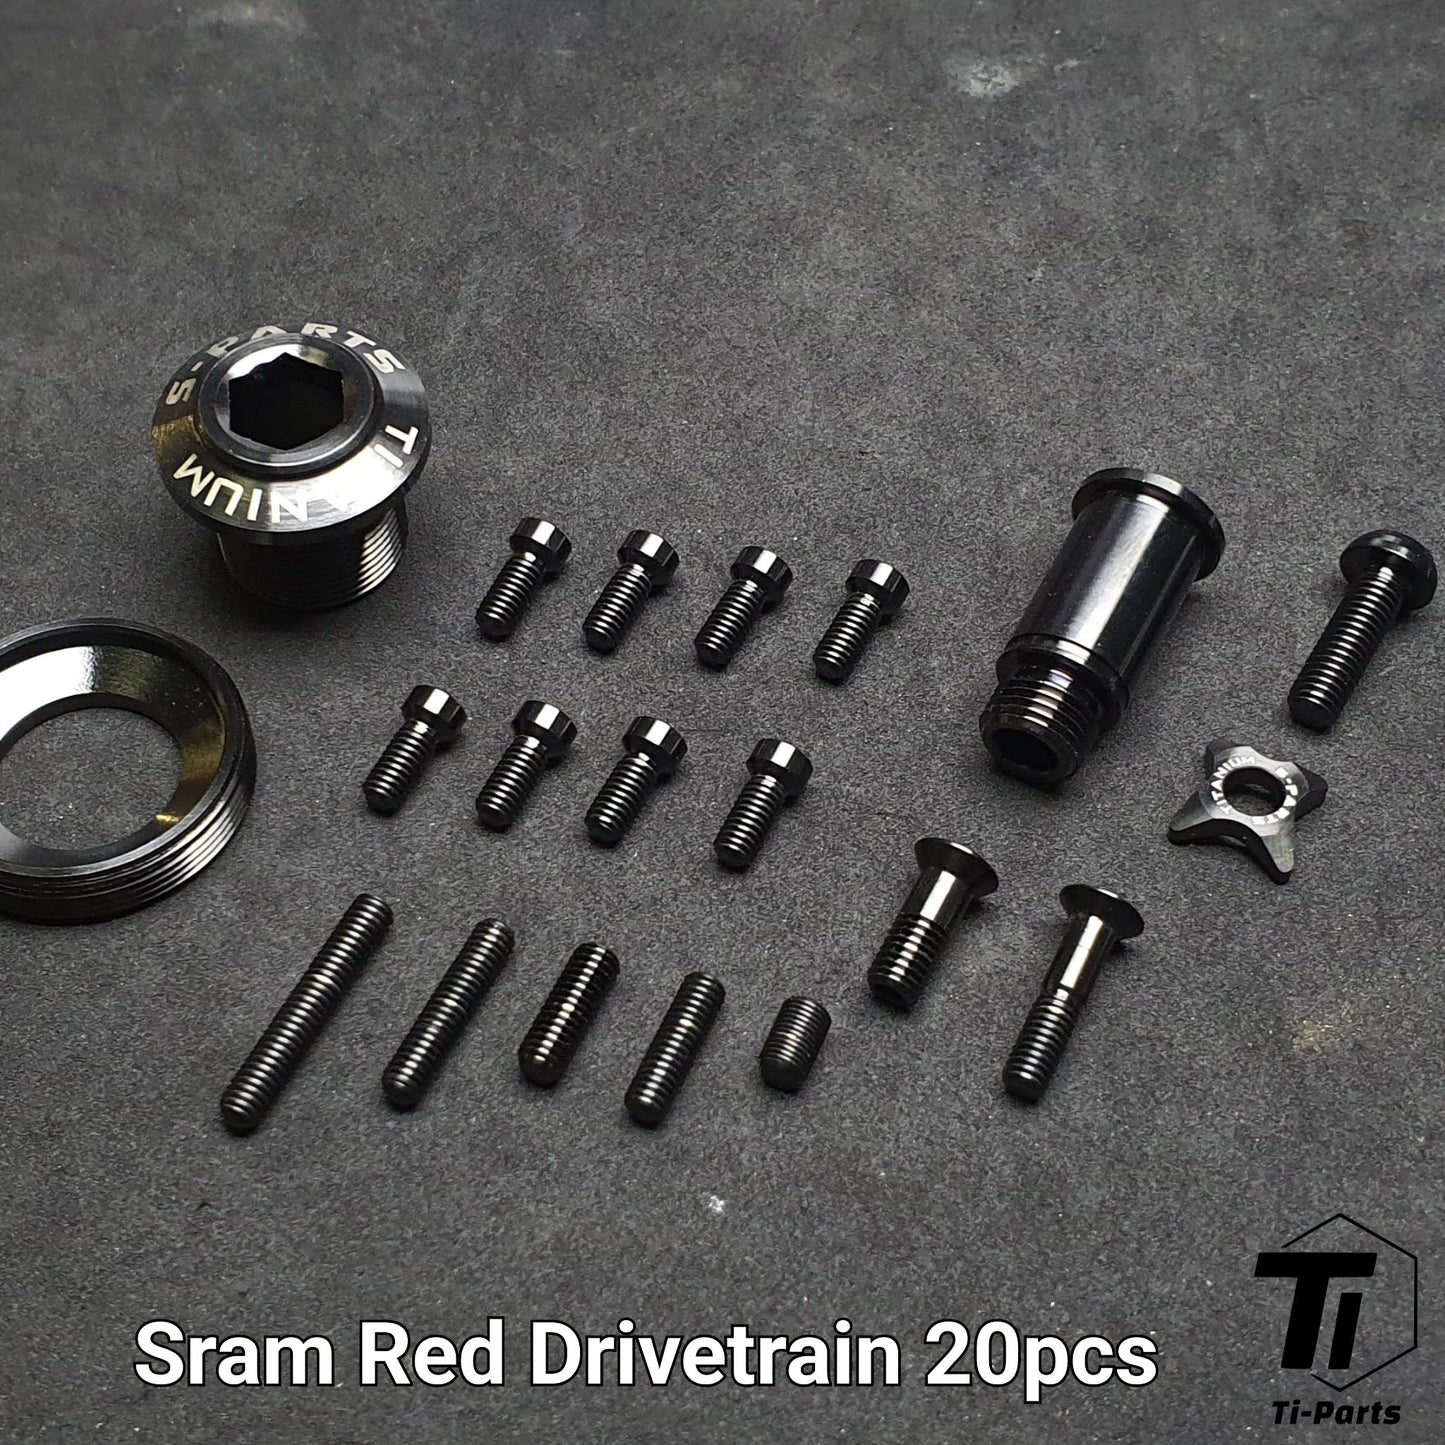 Titanium Sram Red Force Rival eTap AXS ชุดอัปเกรดเต็ม | 11s 12s ดิสก์เบรกไฮดรอลิก เบรกริม ระบบขับเคลื่อน Full Ti Upgrade | ไทเทเนียมเกรด 5 สิงคโปร์